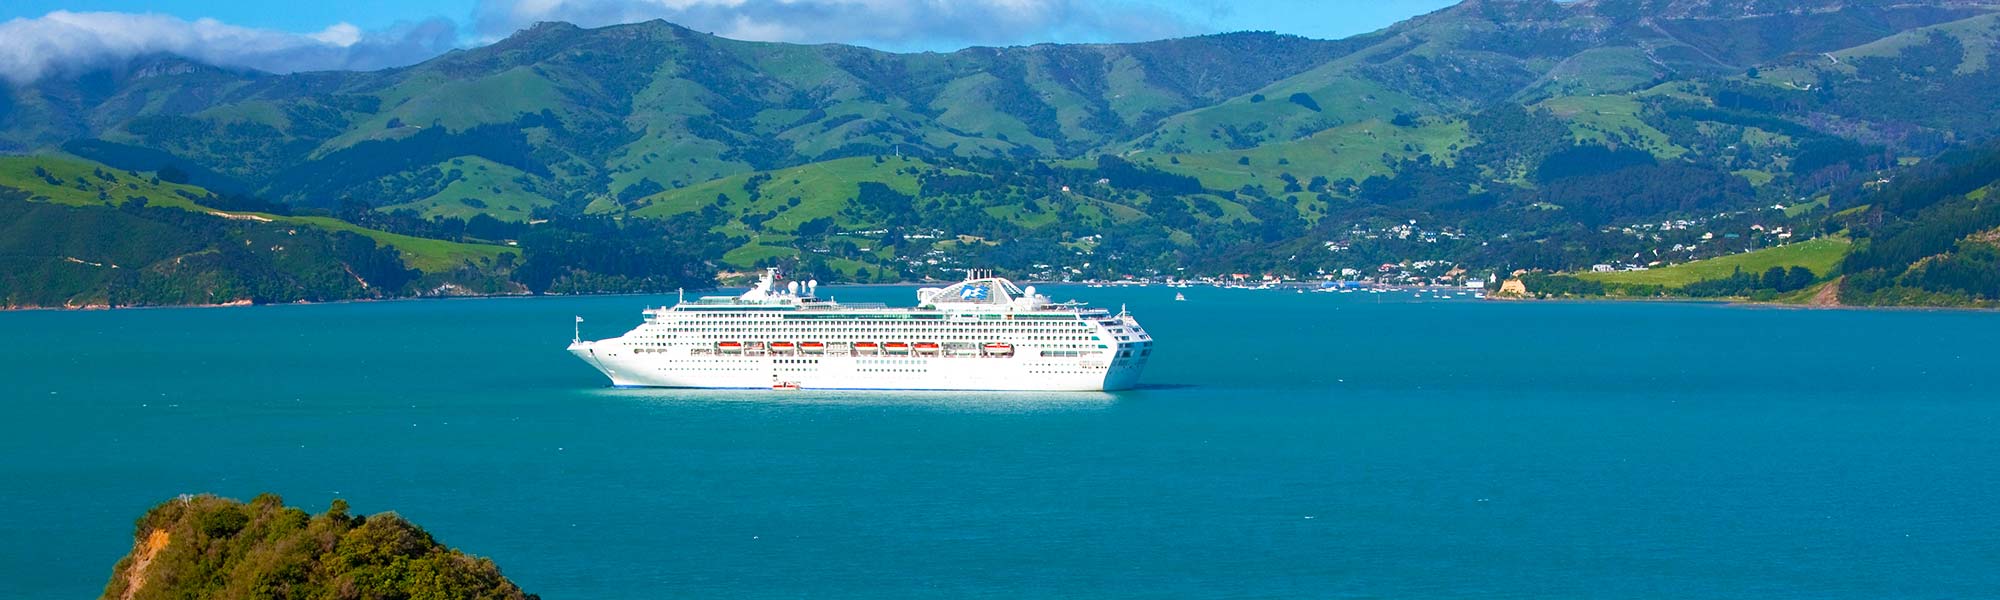 Picton Cruise Ship passengers